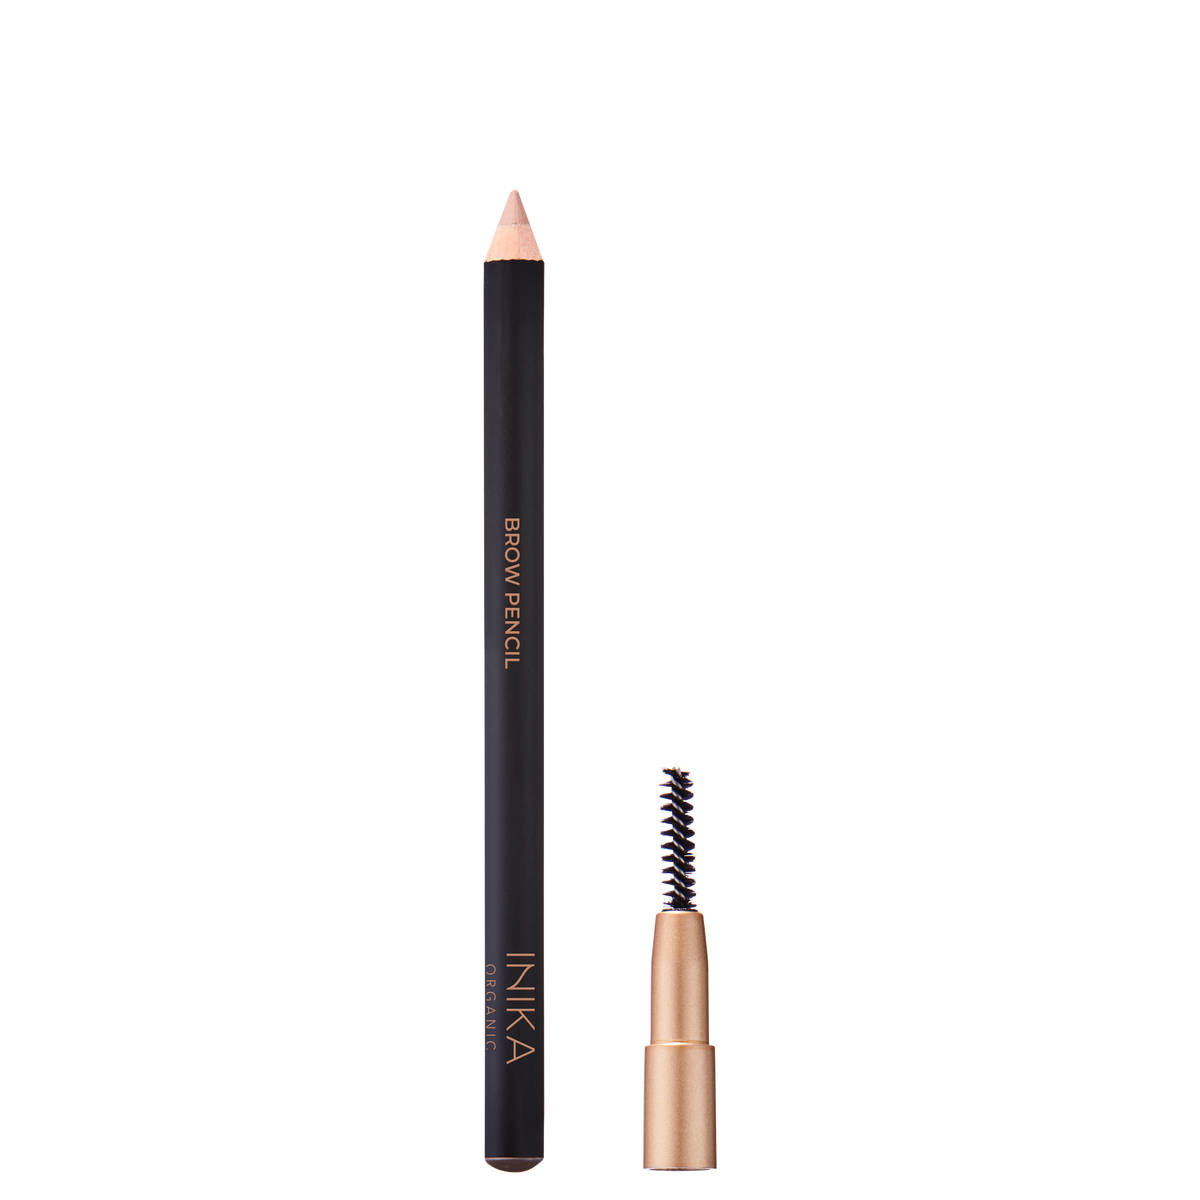 Inika Make up - Certified Organic Brow Pencil